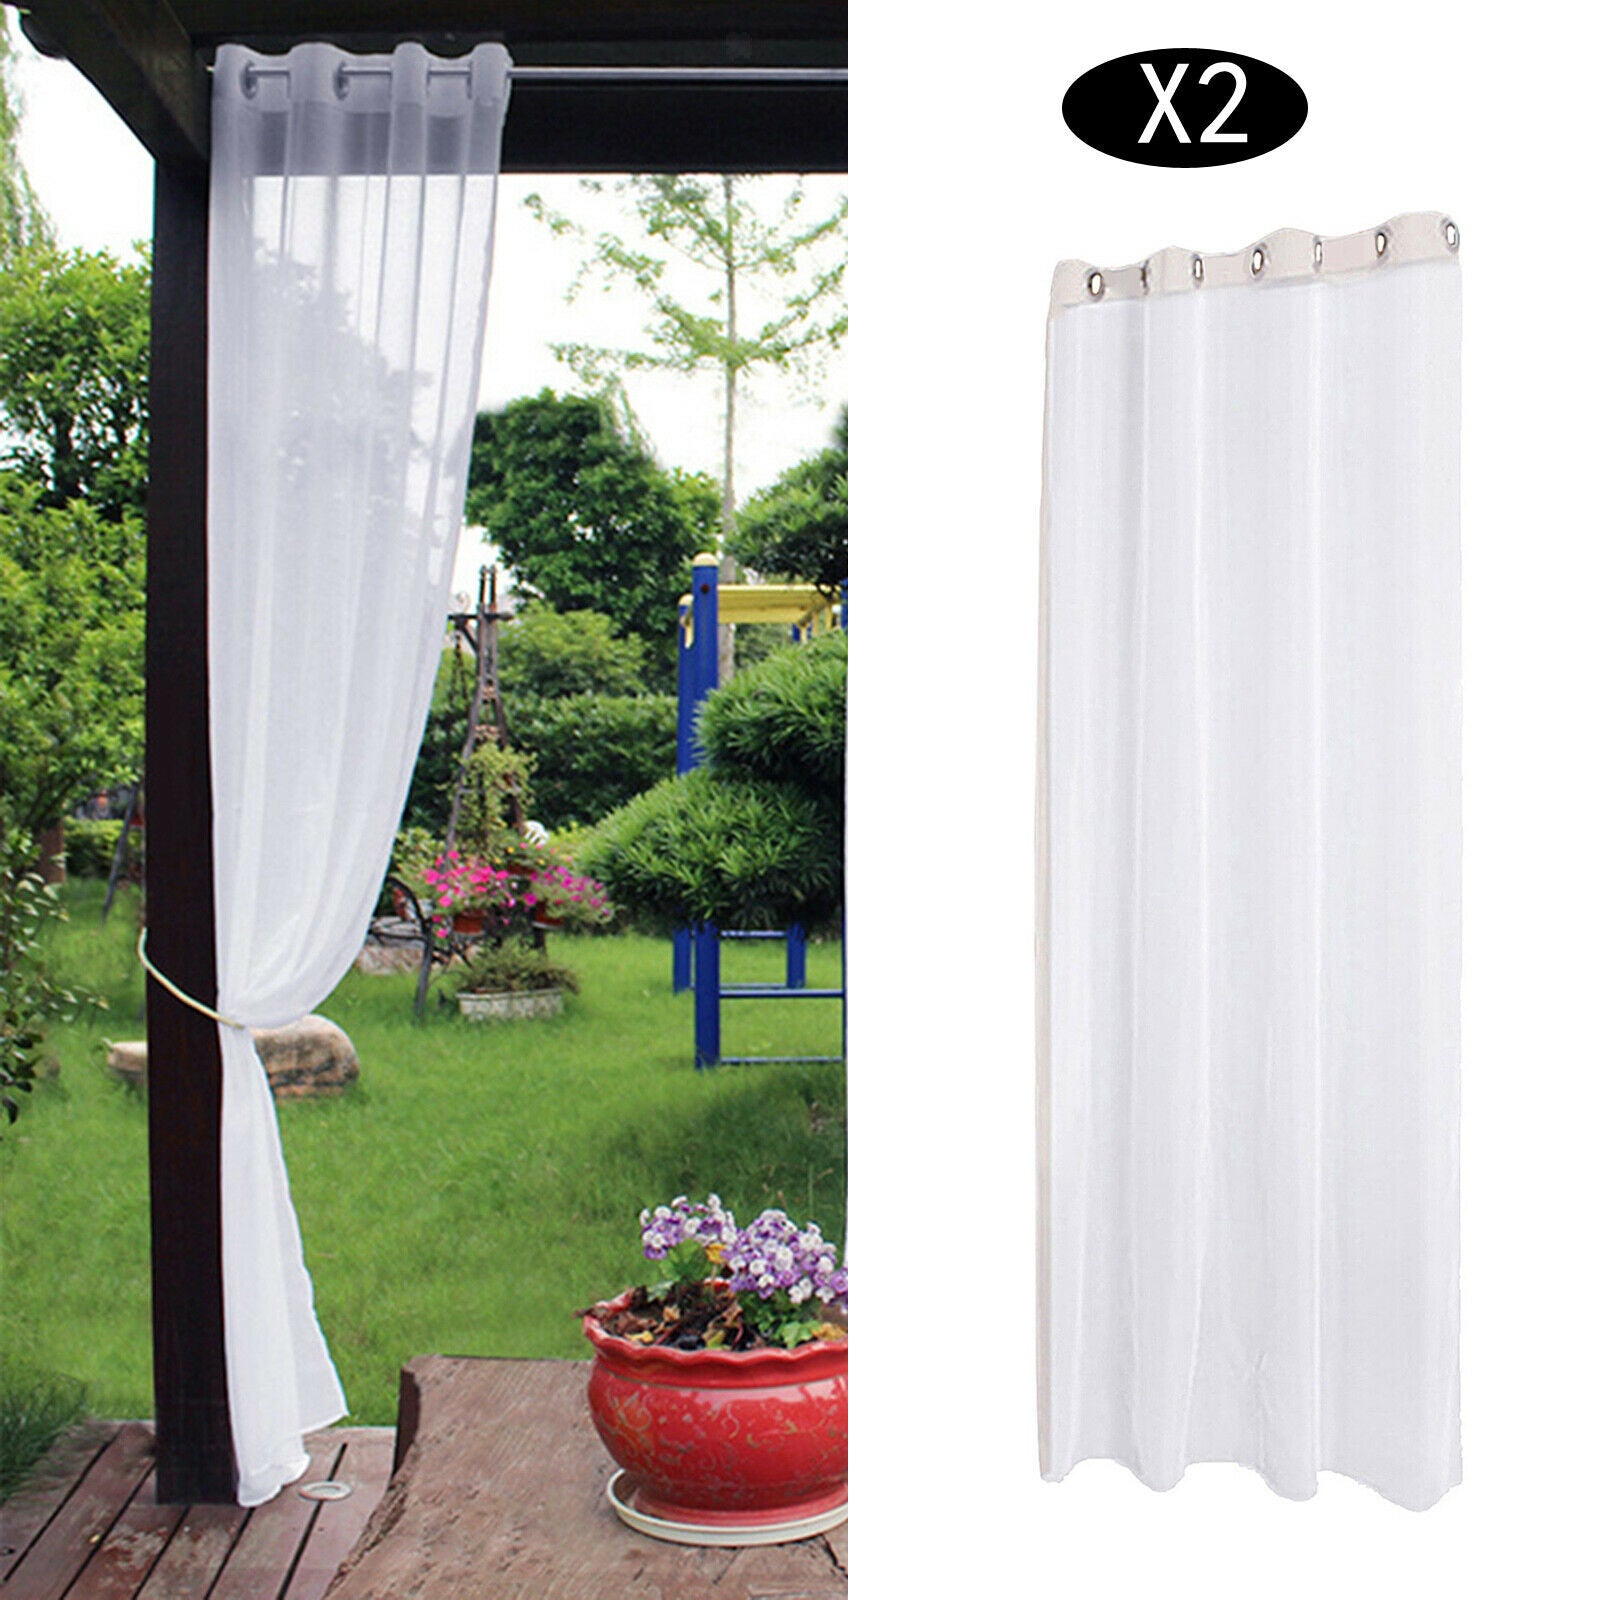 2pcs White Sheer Curtain Waterproof Drape with Tieback Pool Decorative